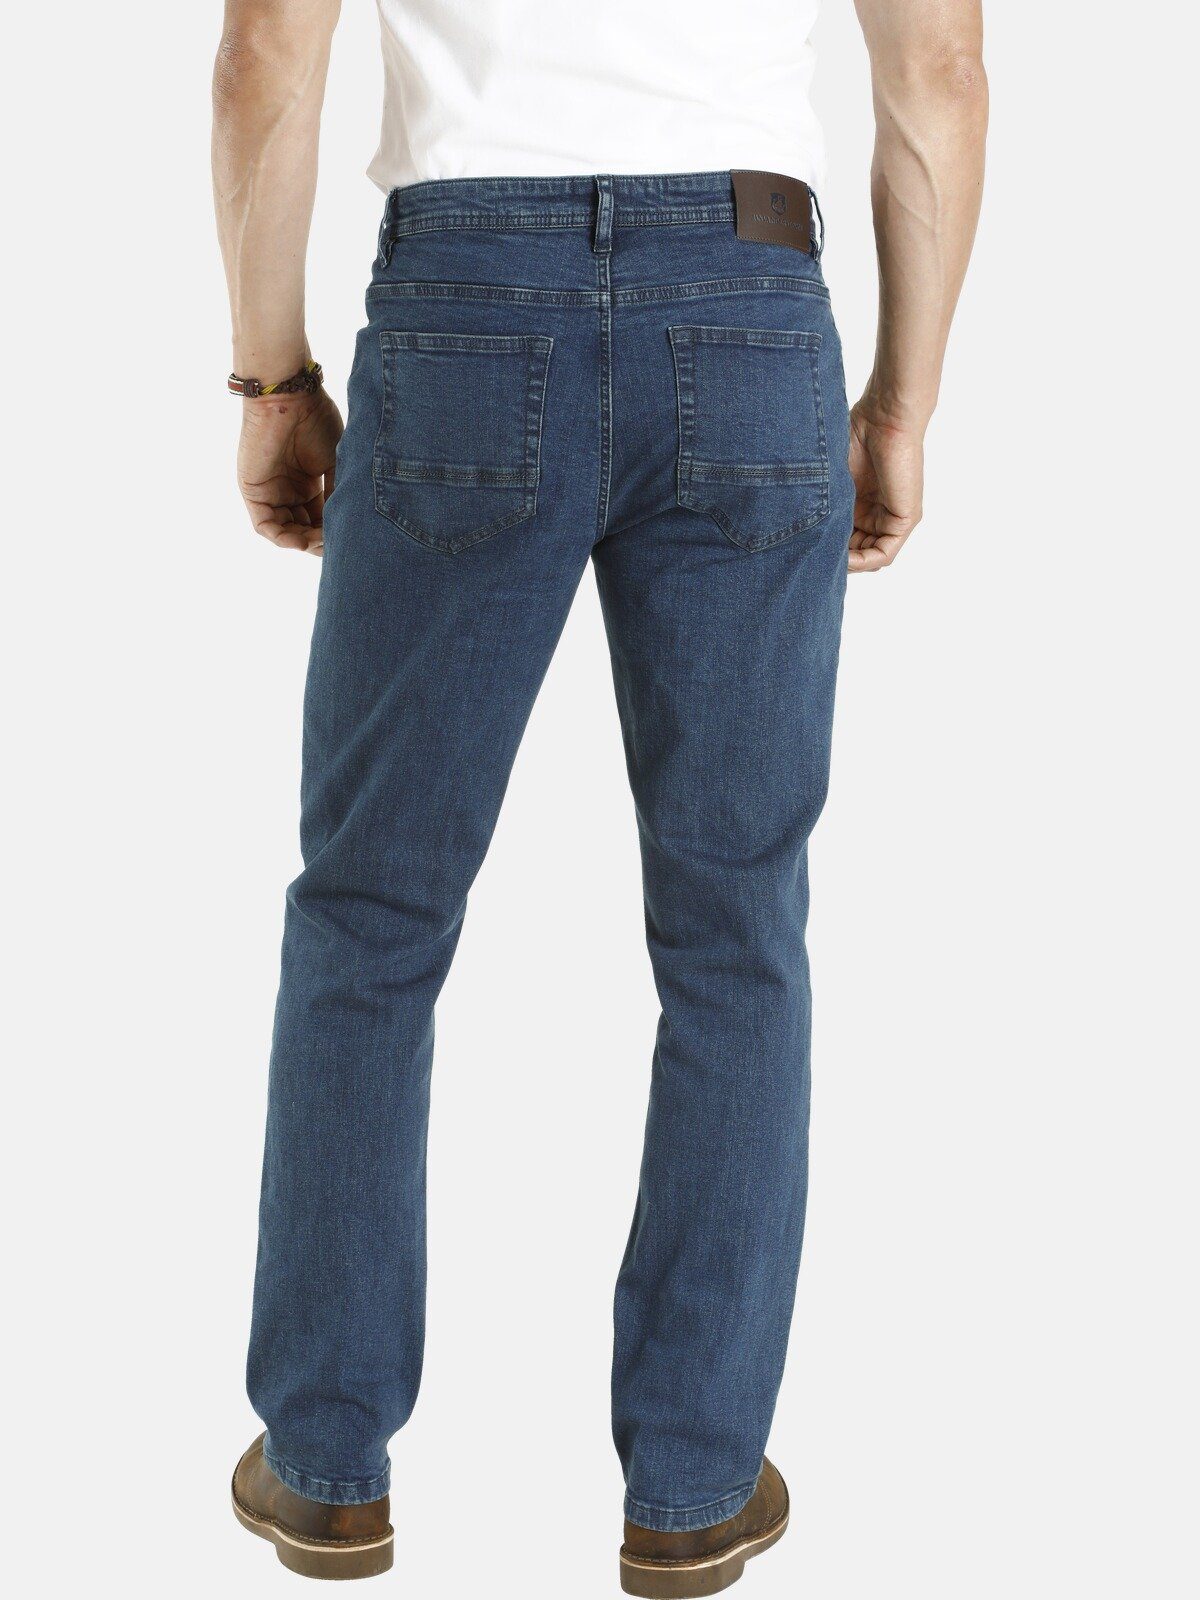 Jan ALMIN dunkelblau Stretchanteil Vanderstorm mit 5-Pocket-Jeans